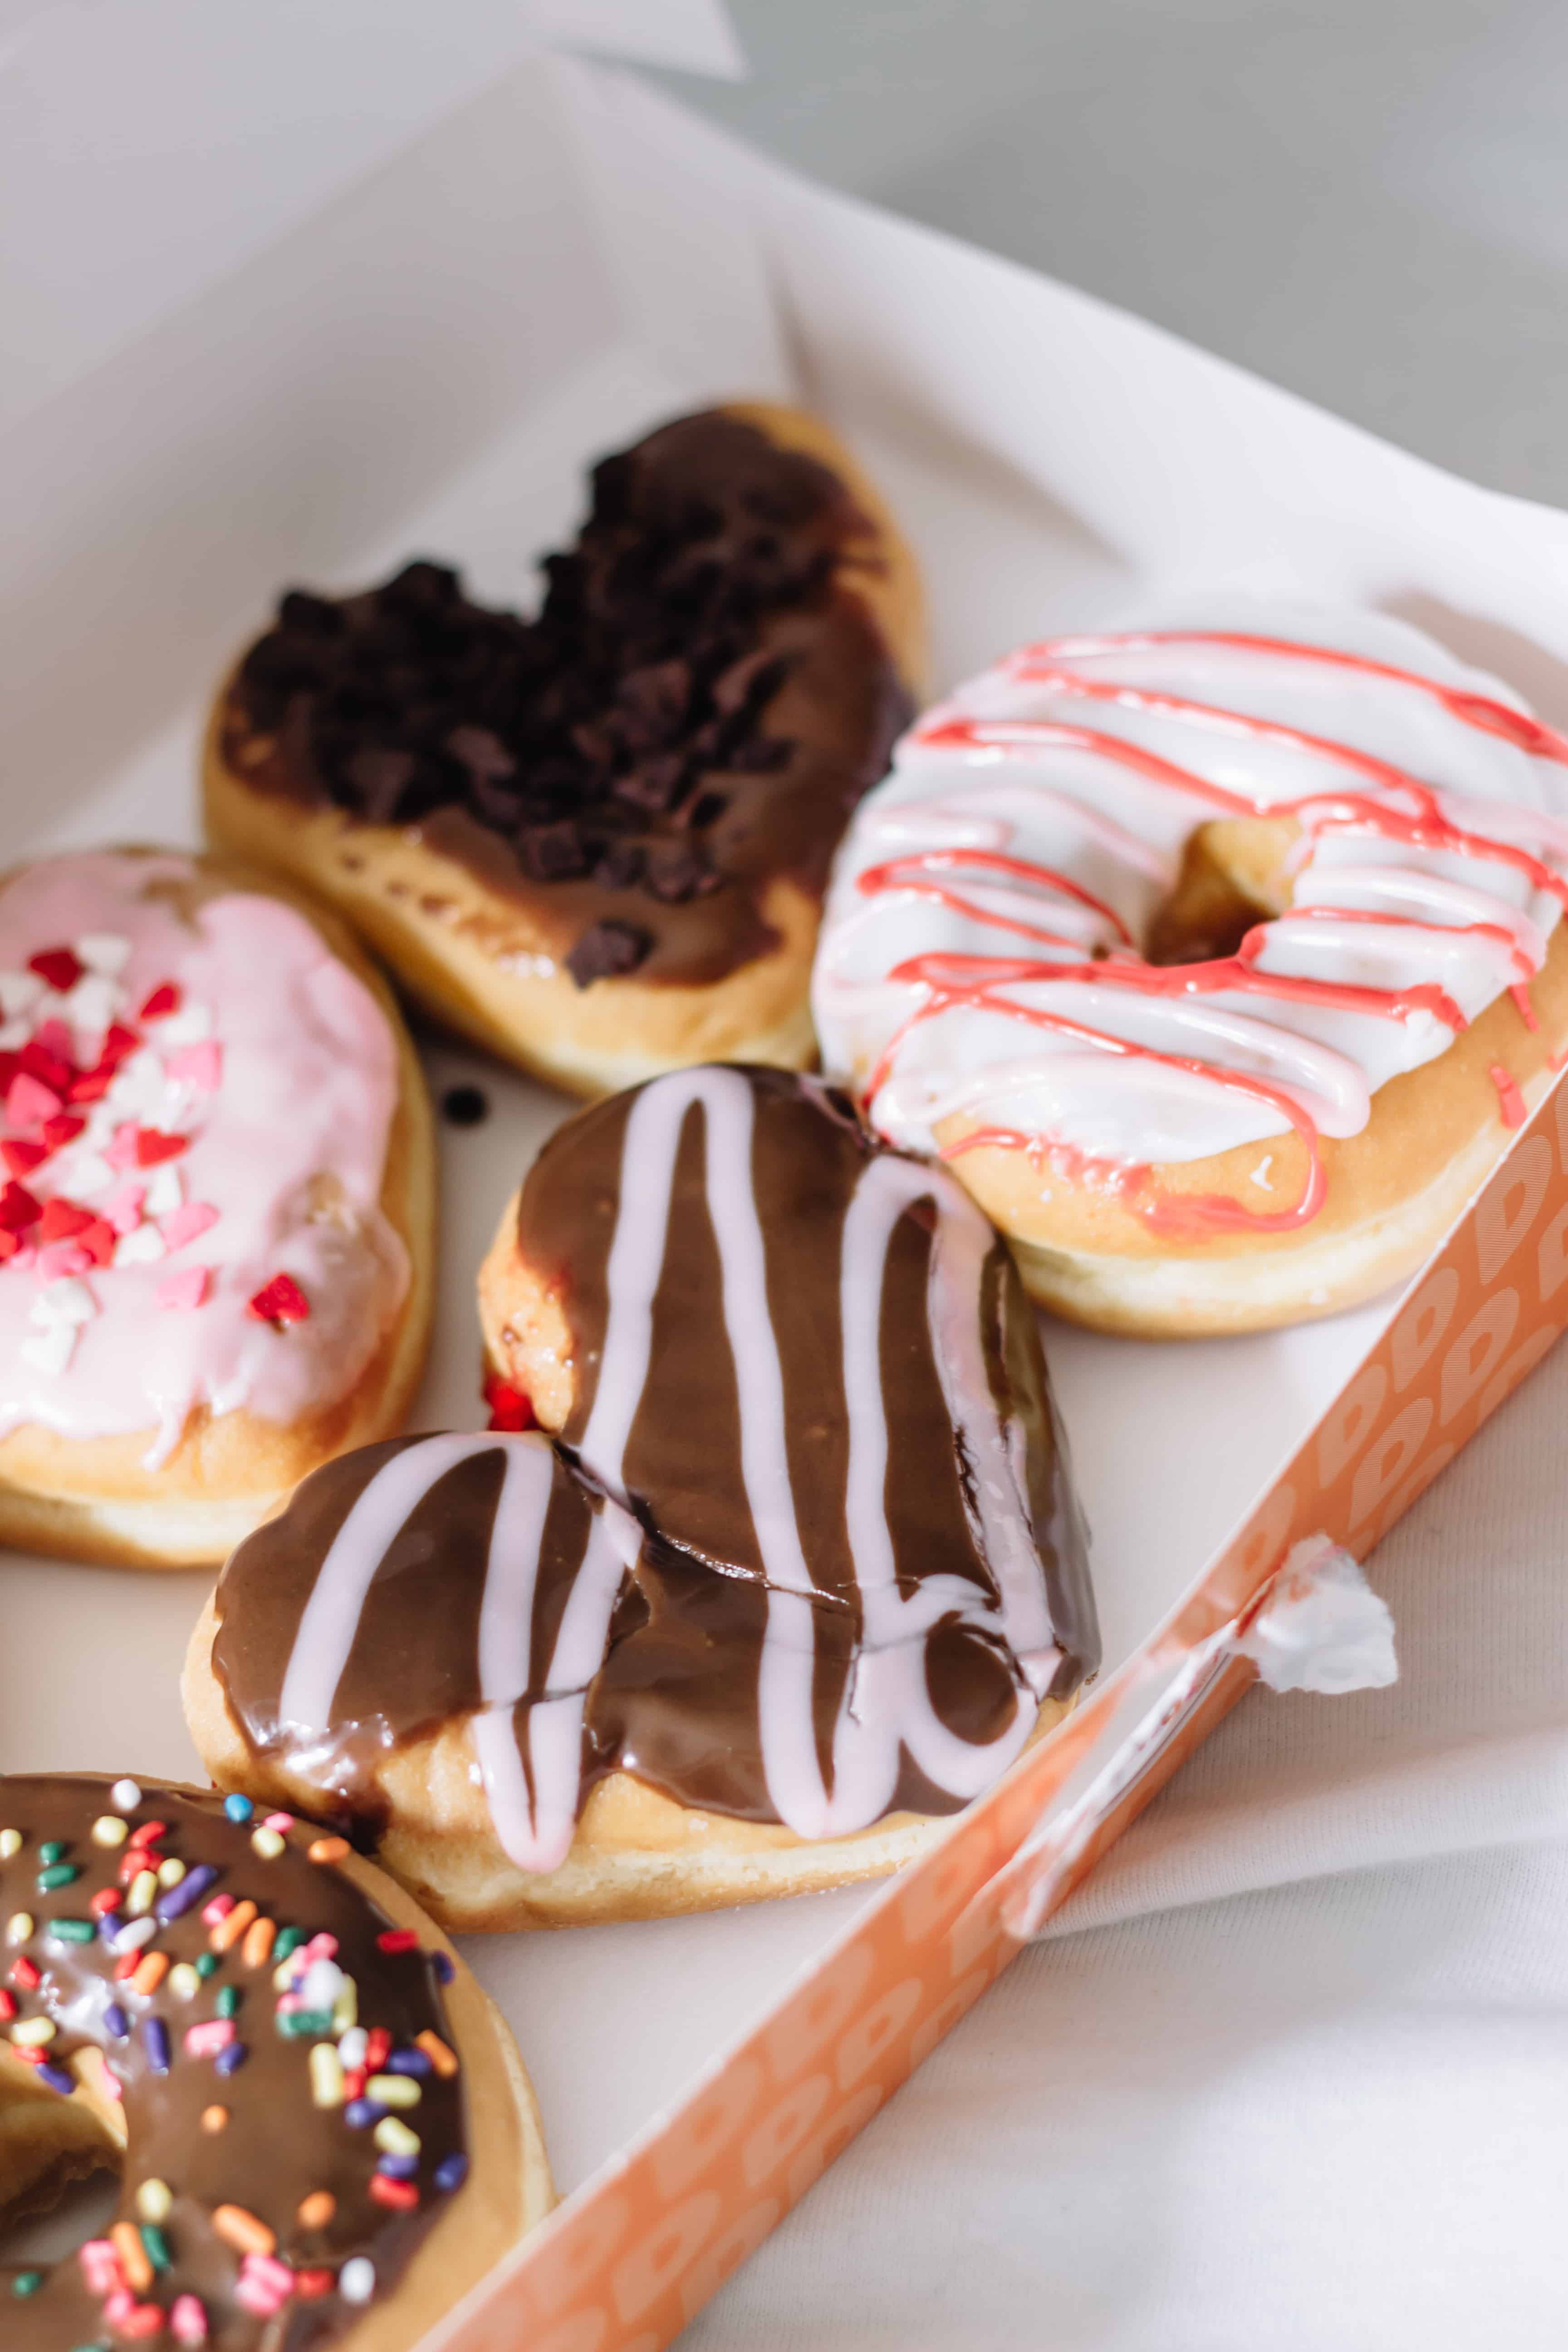 I Heart Dunkin' Donuts New Valentine's Day Flavors - Hot Beauty Health